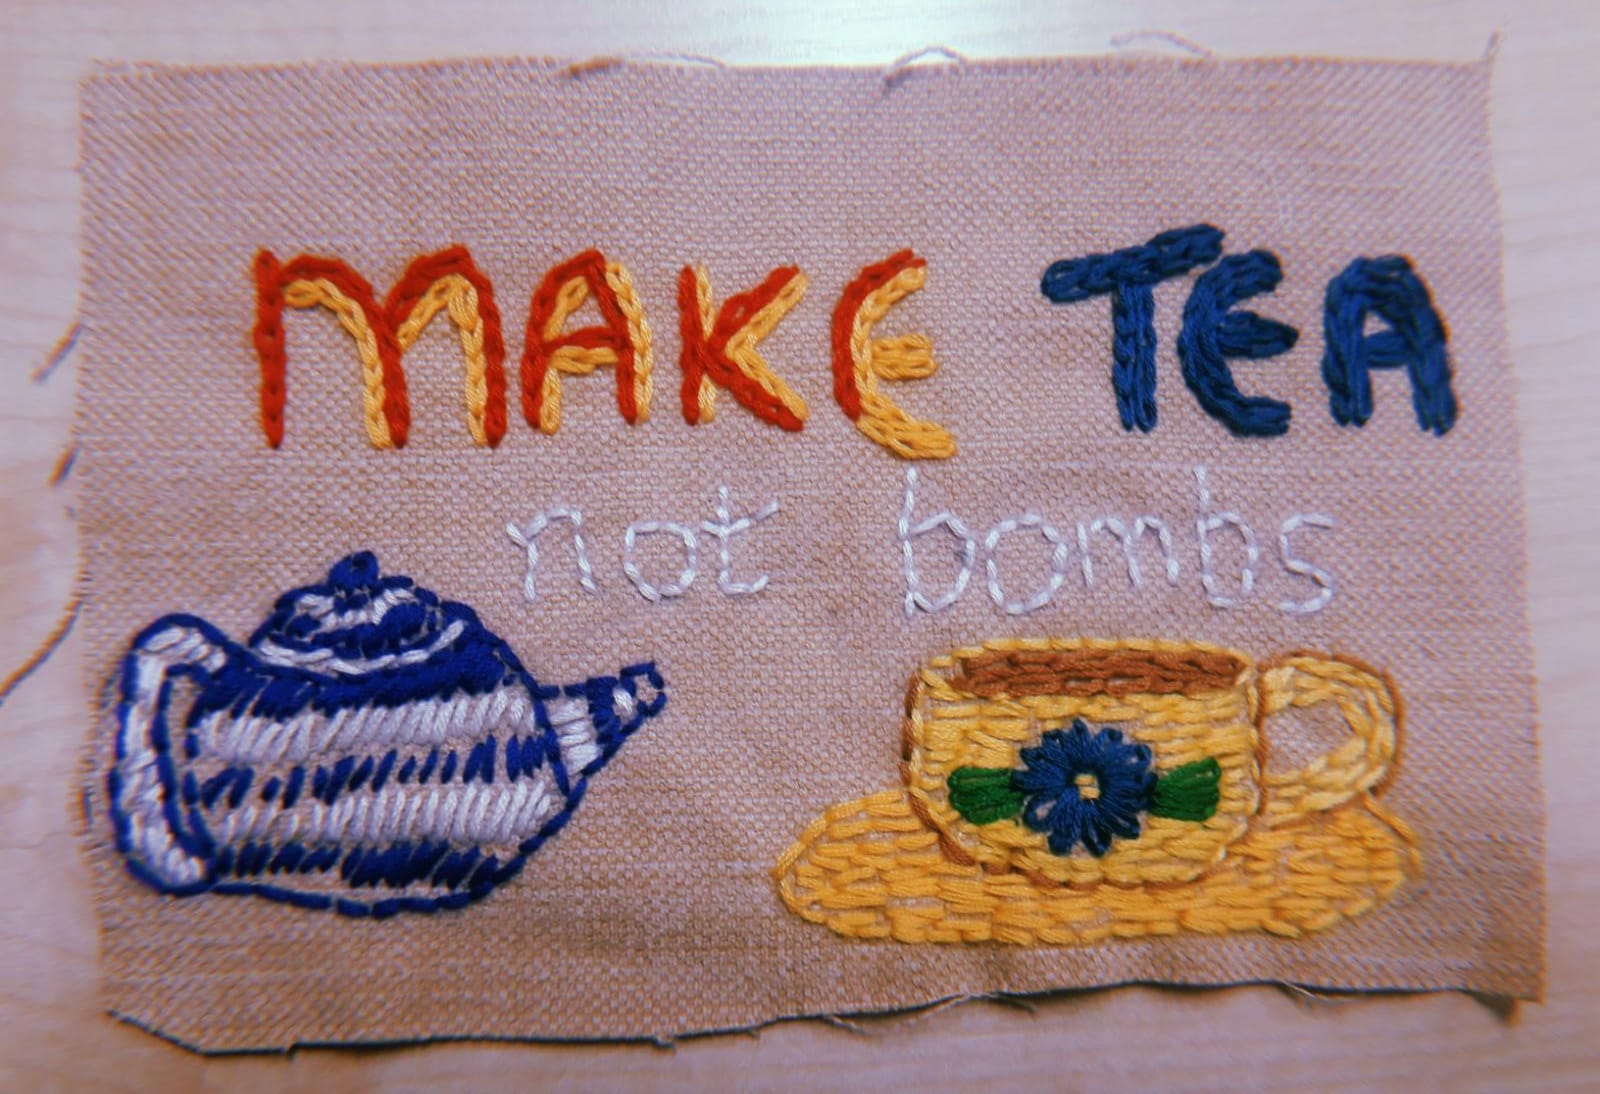 teapot stitches say make tea not bombs 